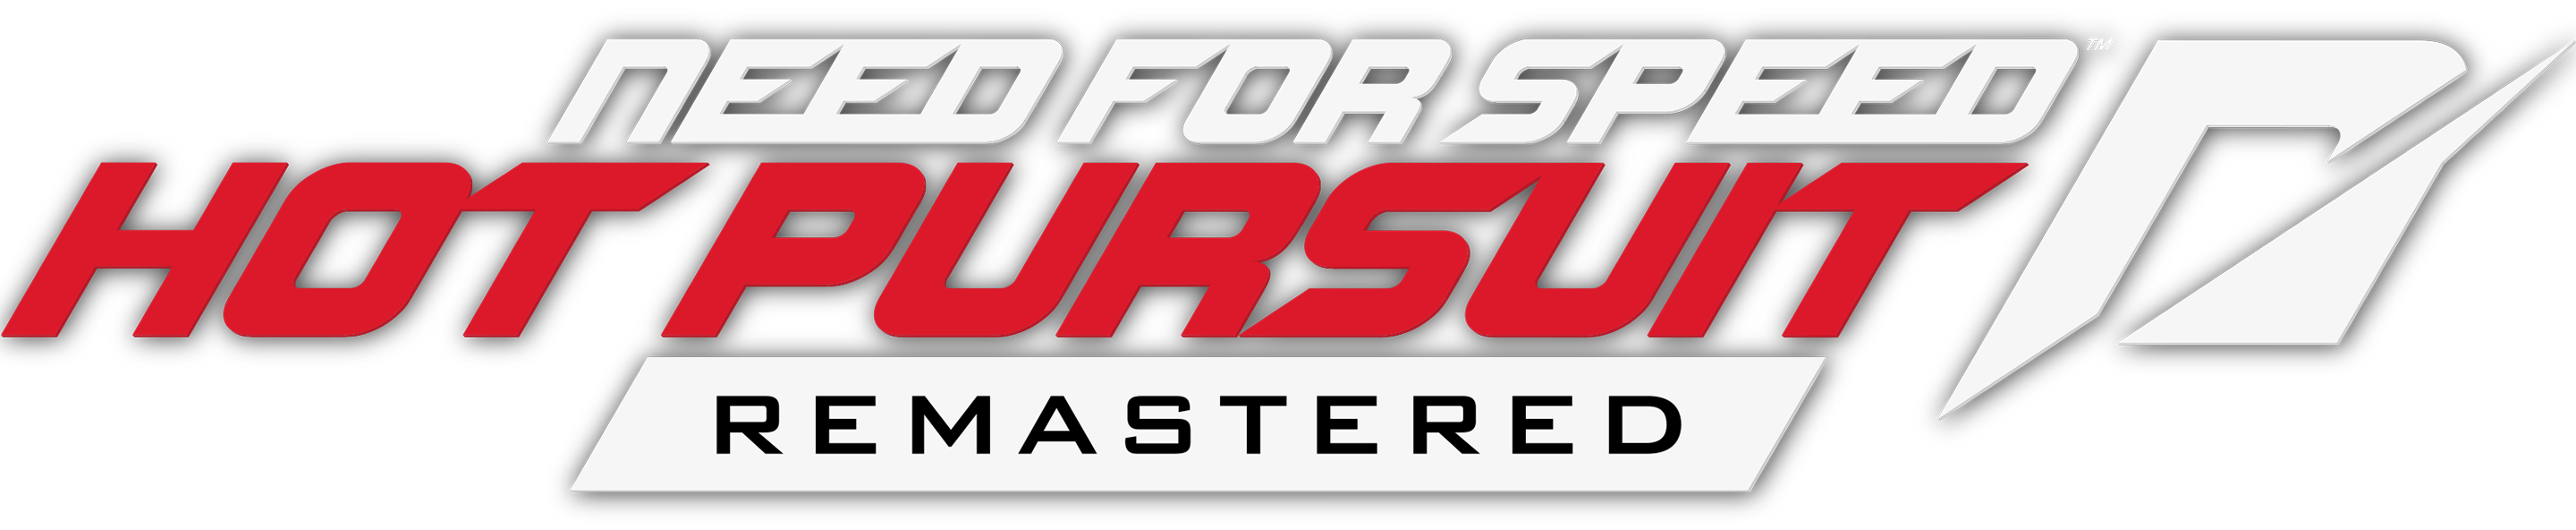 Hot limited. NFS логотип. Need for Speed hot Pursuit ремастер. Логотип need for Speed hot Pursuit Remastered. Need for Speed hot Pursuit Remastered logo.